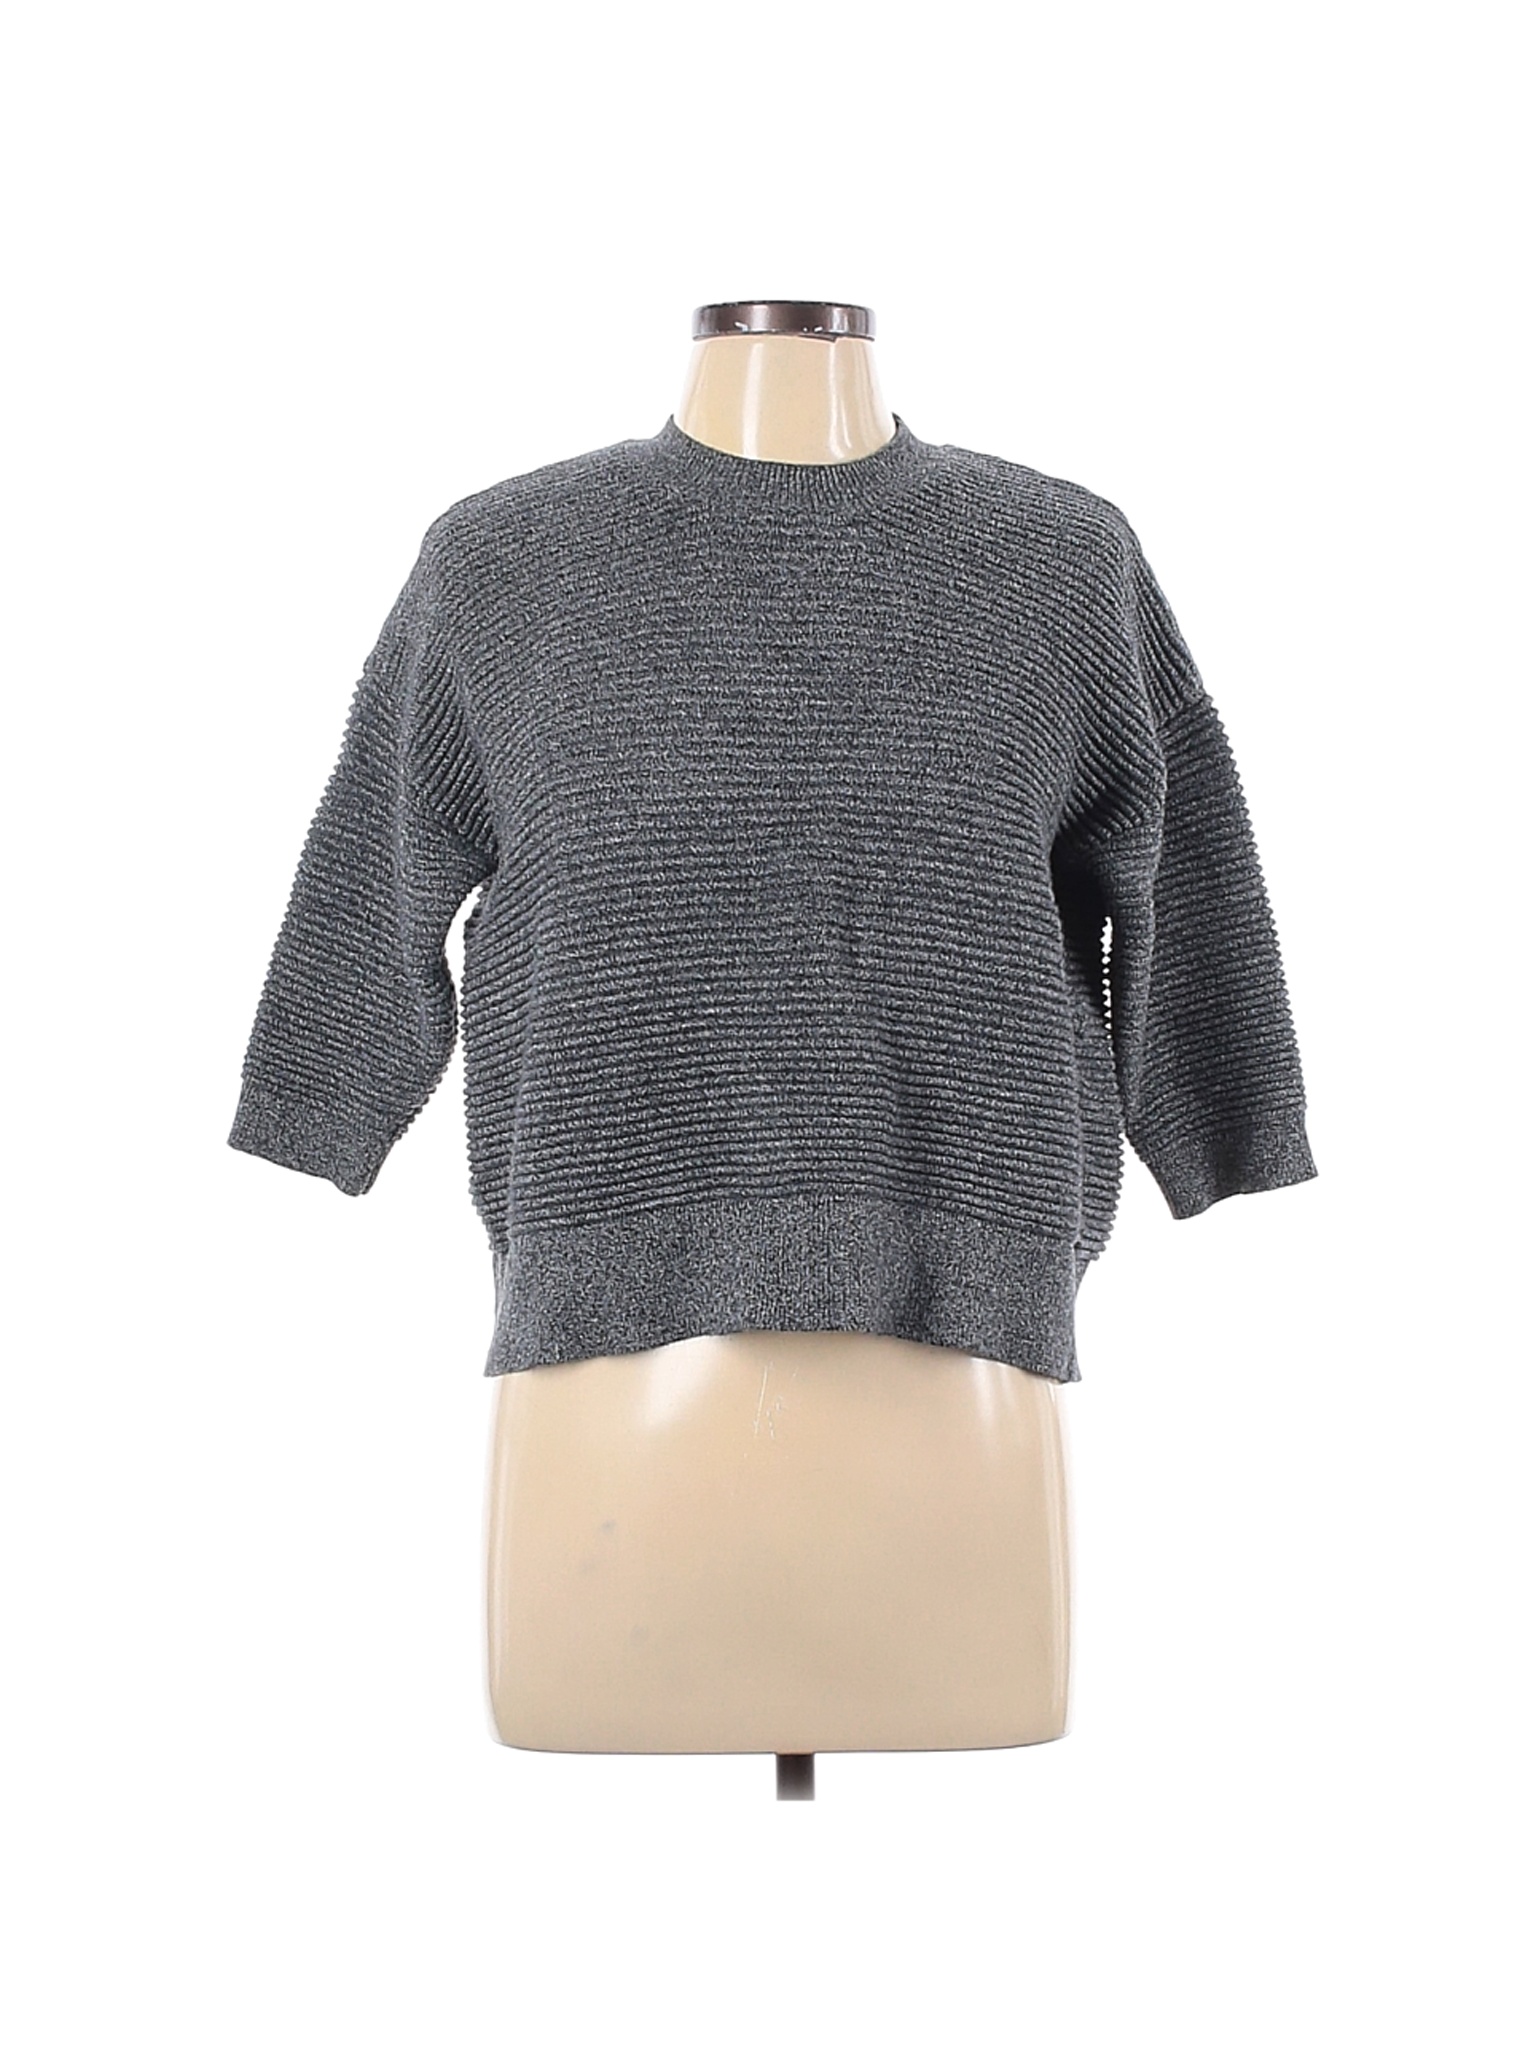 FRNCH Women Gray Pullover Sweater L | eBay